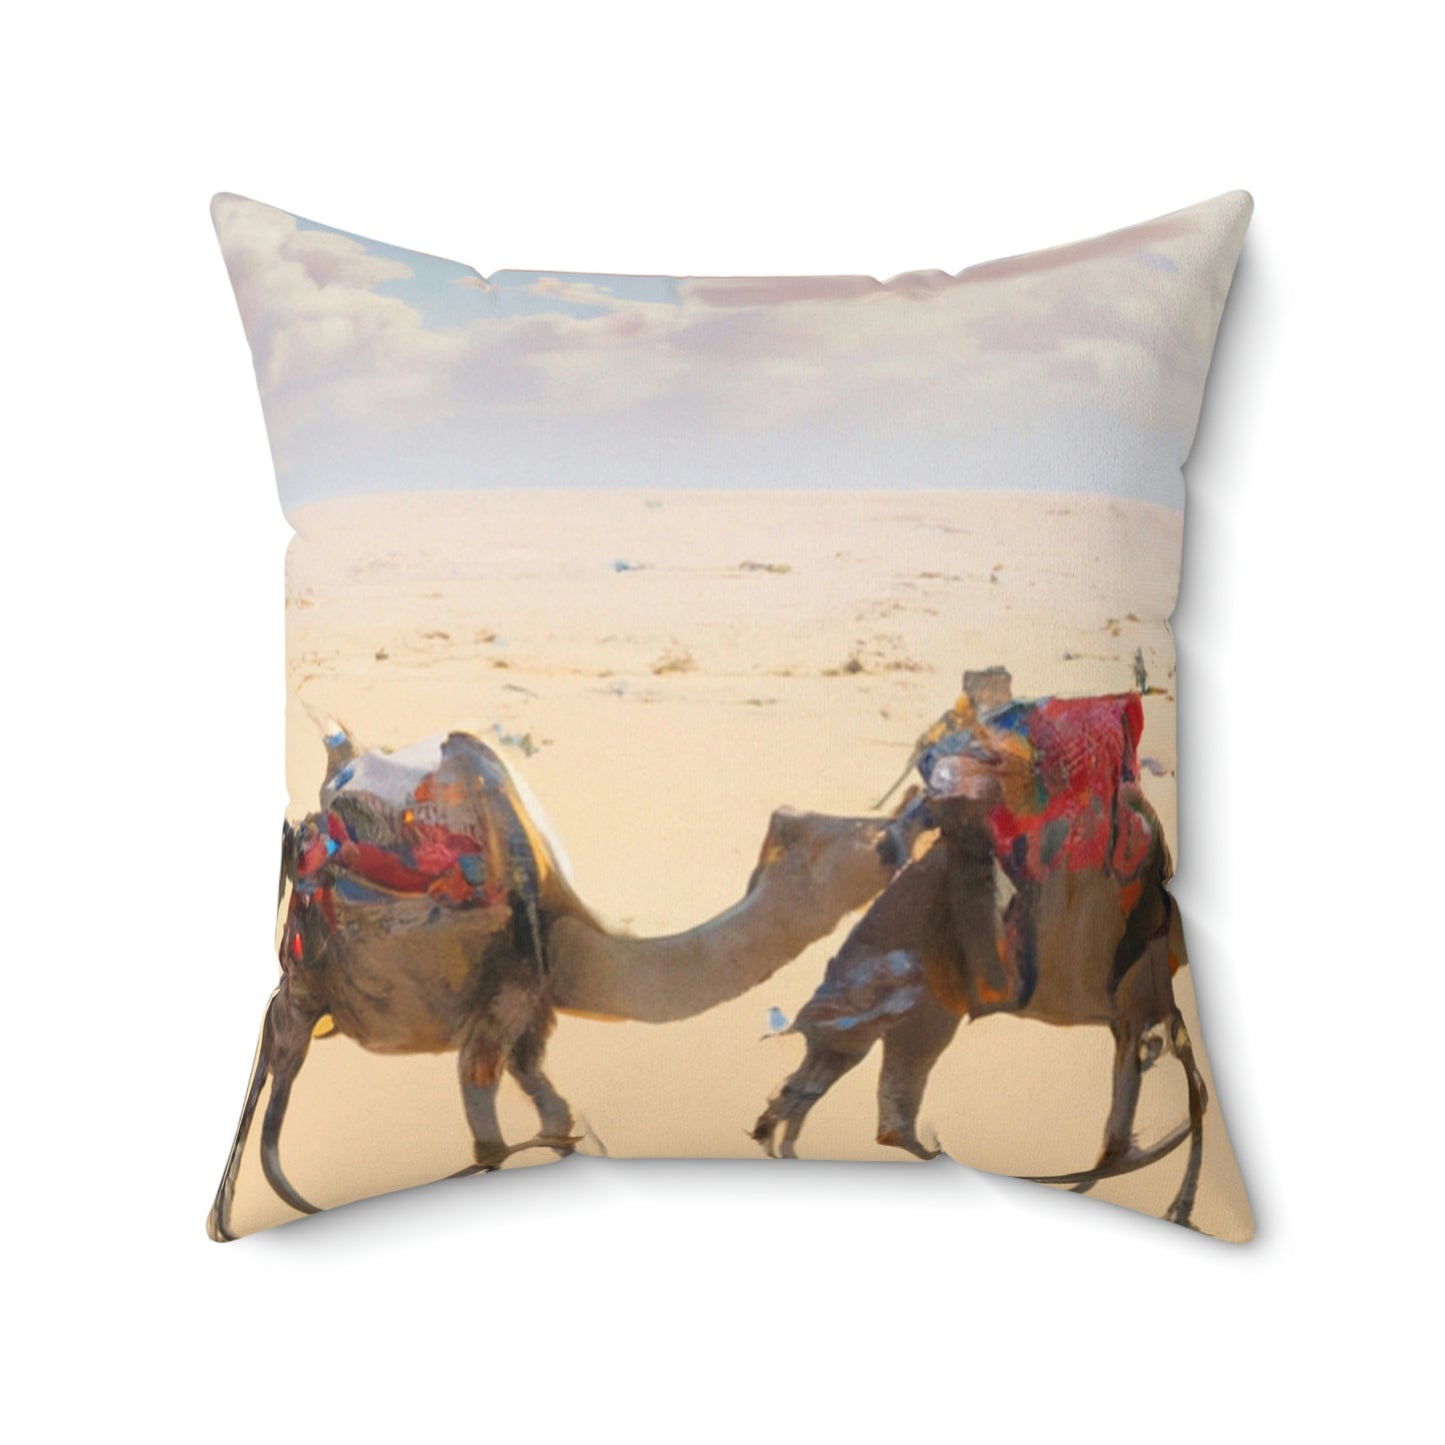 Spun Polyester Square Pillow - Camel Caravan